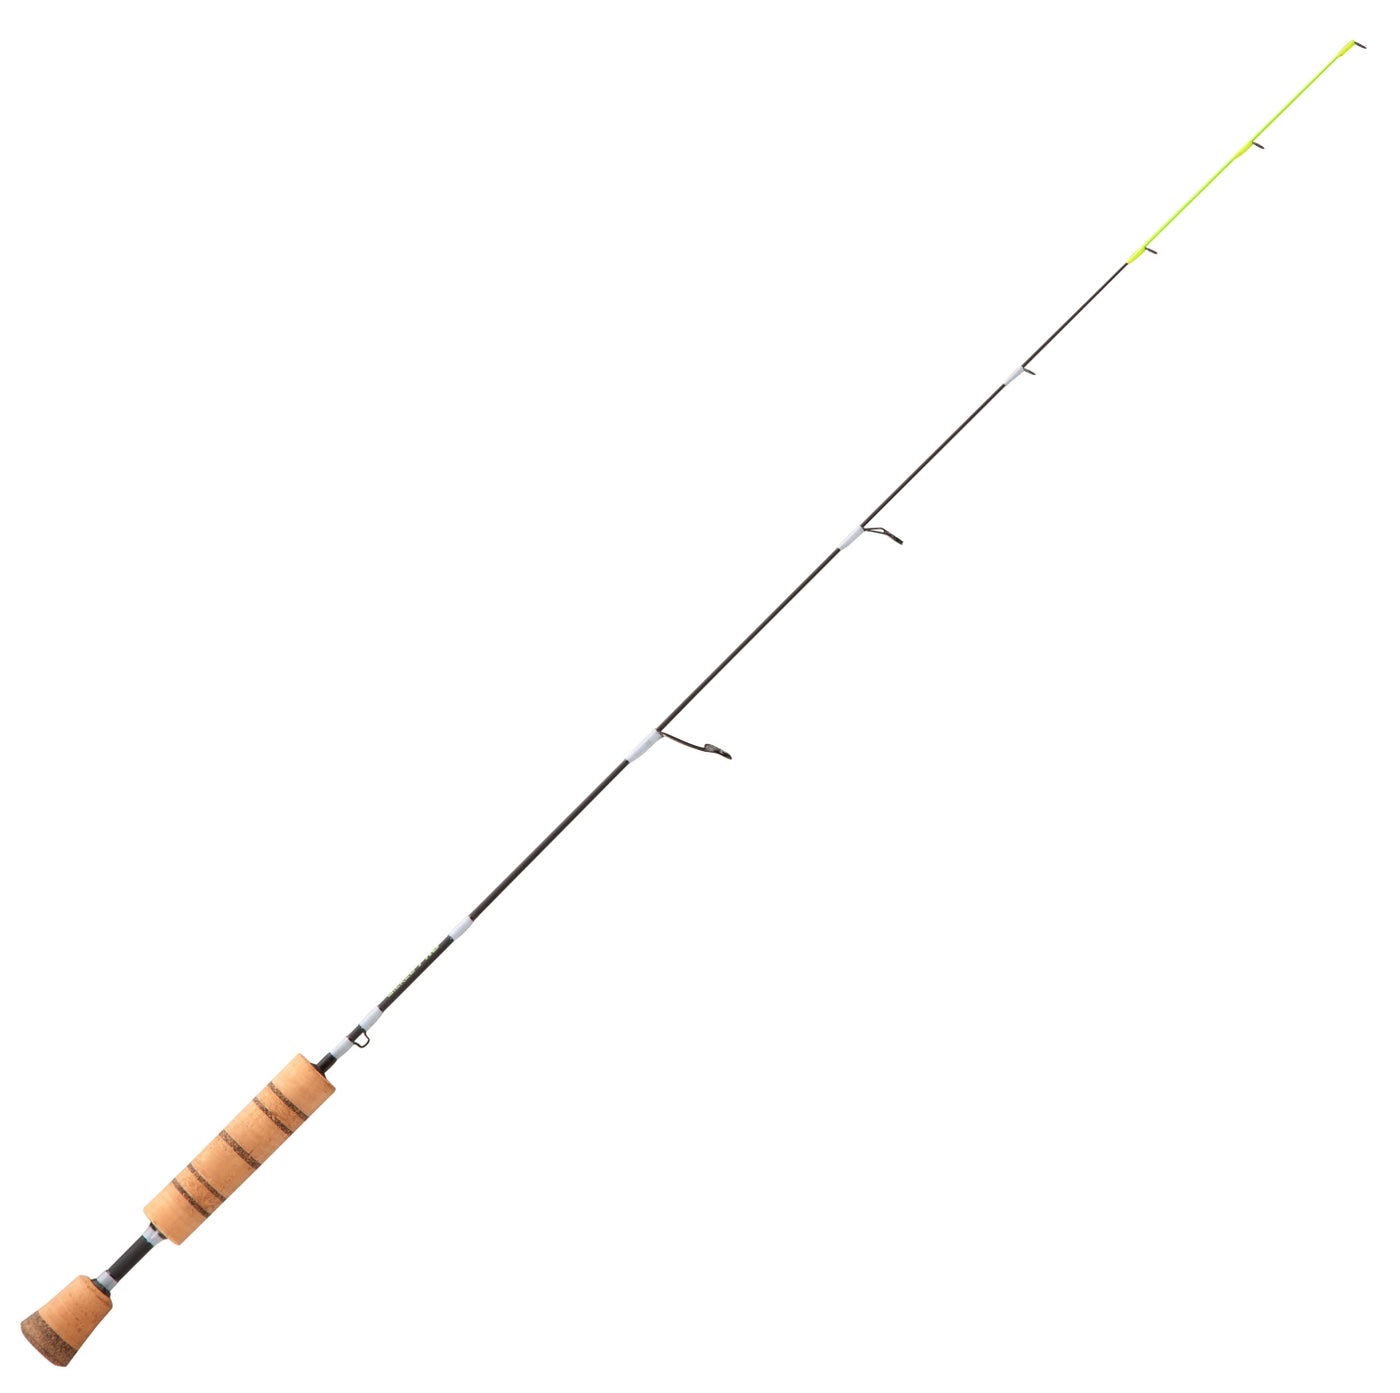 13 Fishing Wicked Pro Ice Rod - 28 ml